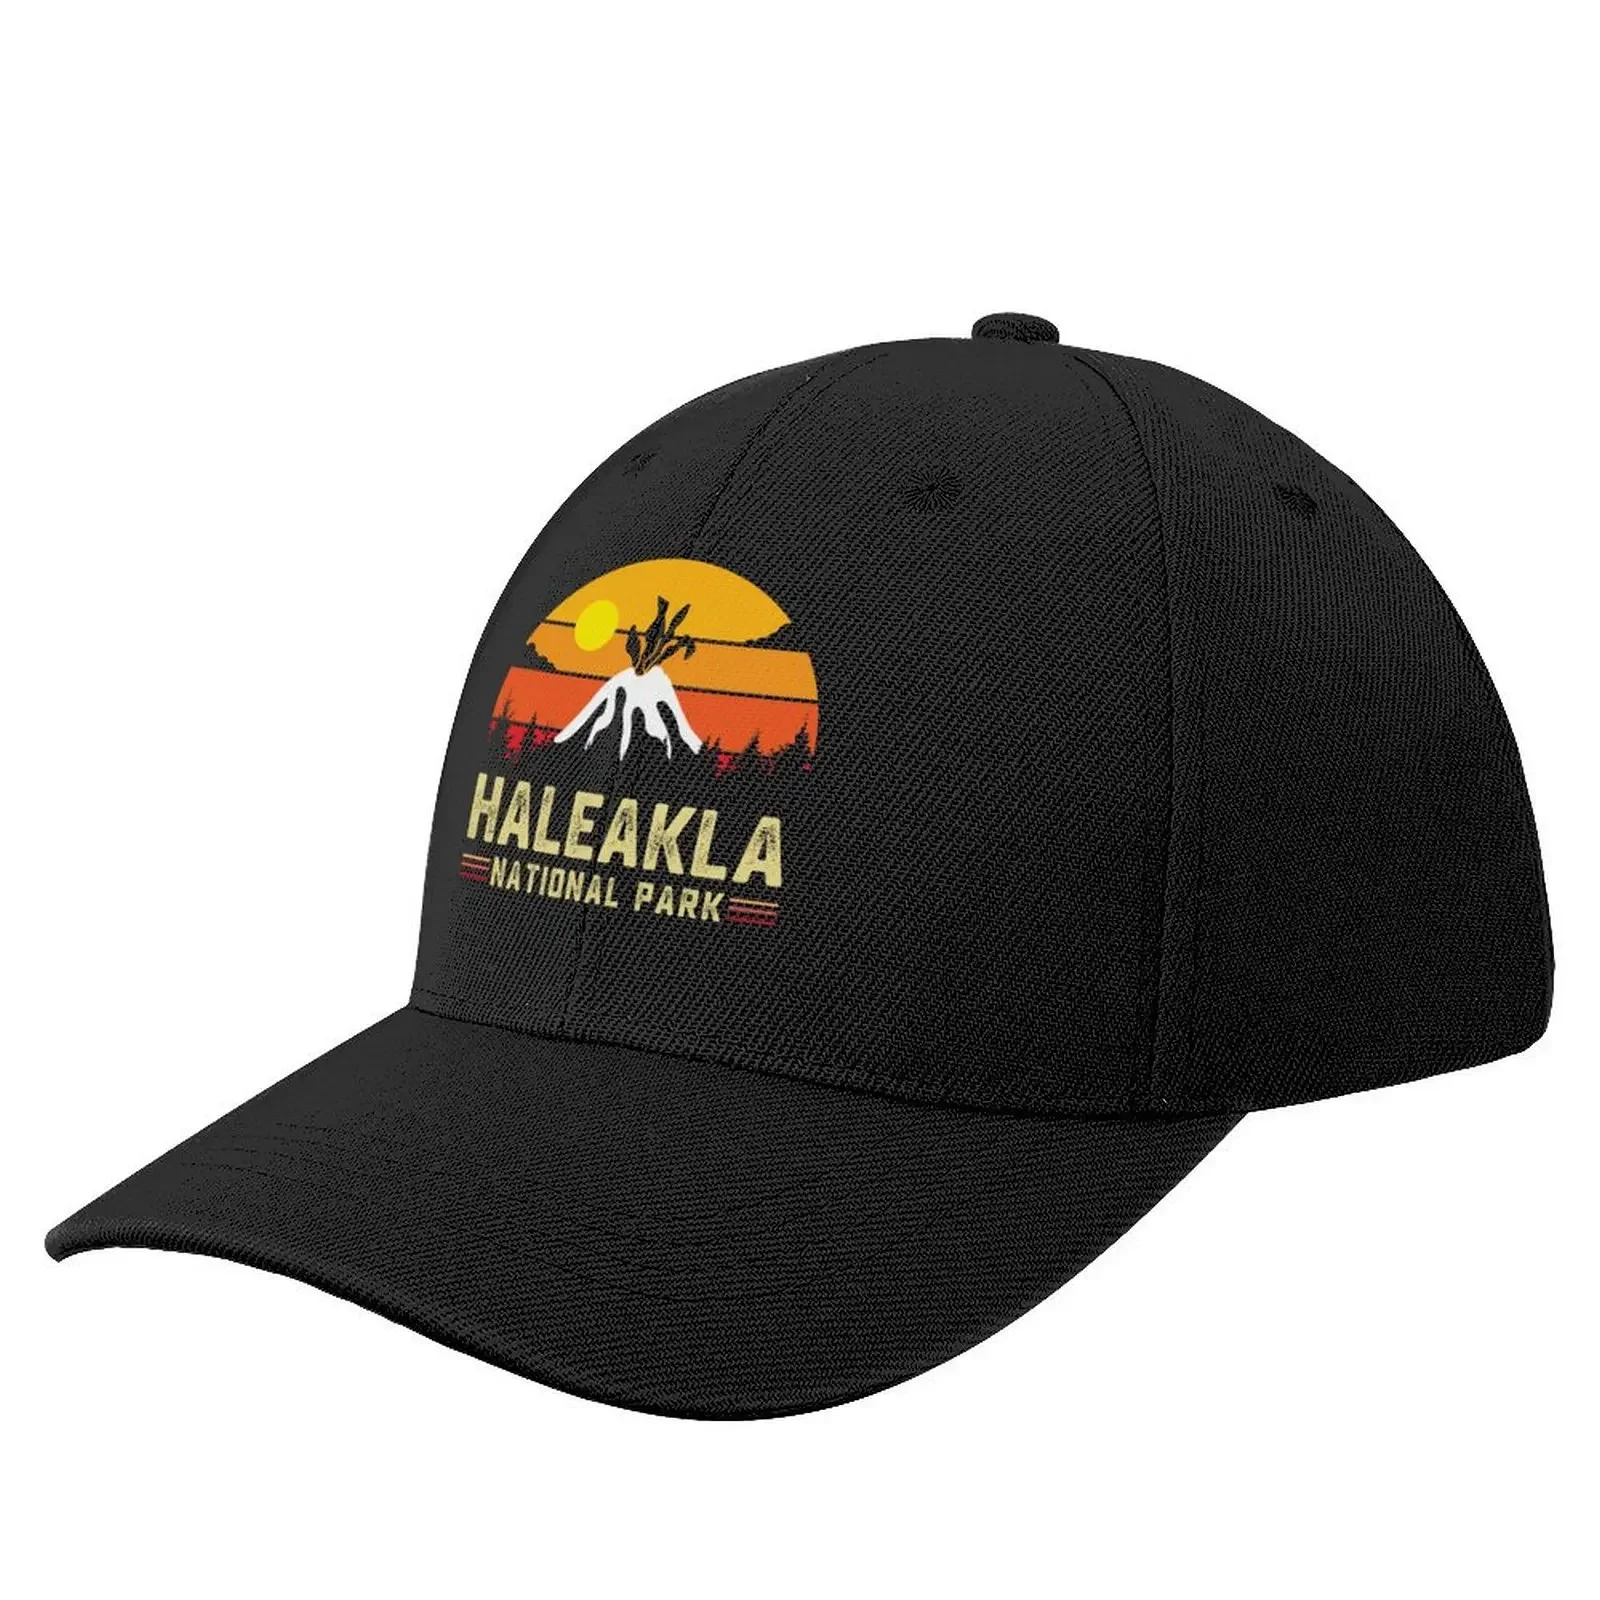 

haleakla national park hawaii vintage retro sunset2 Baseball Cap Rugby Hat Man For The Sun Visor Women's Beach Men's